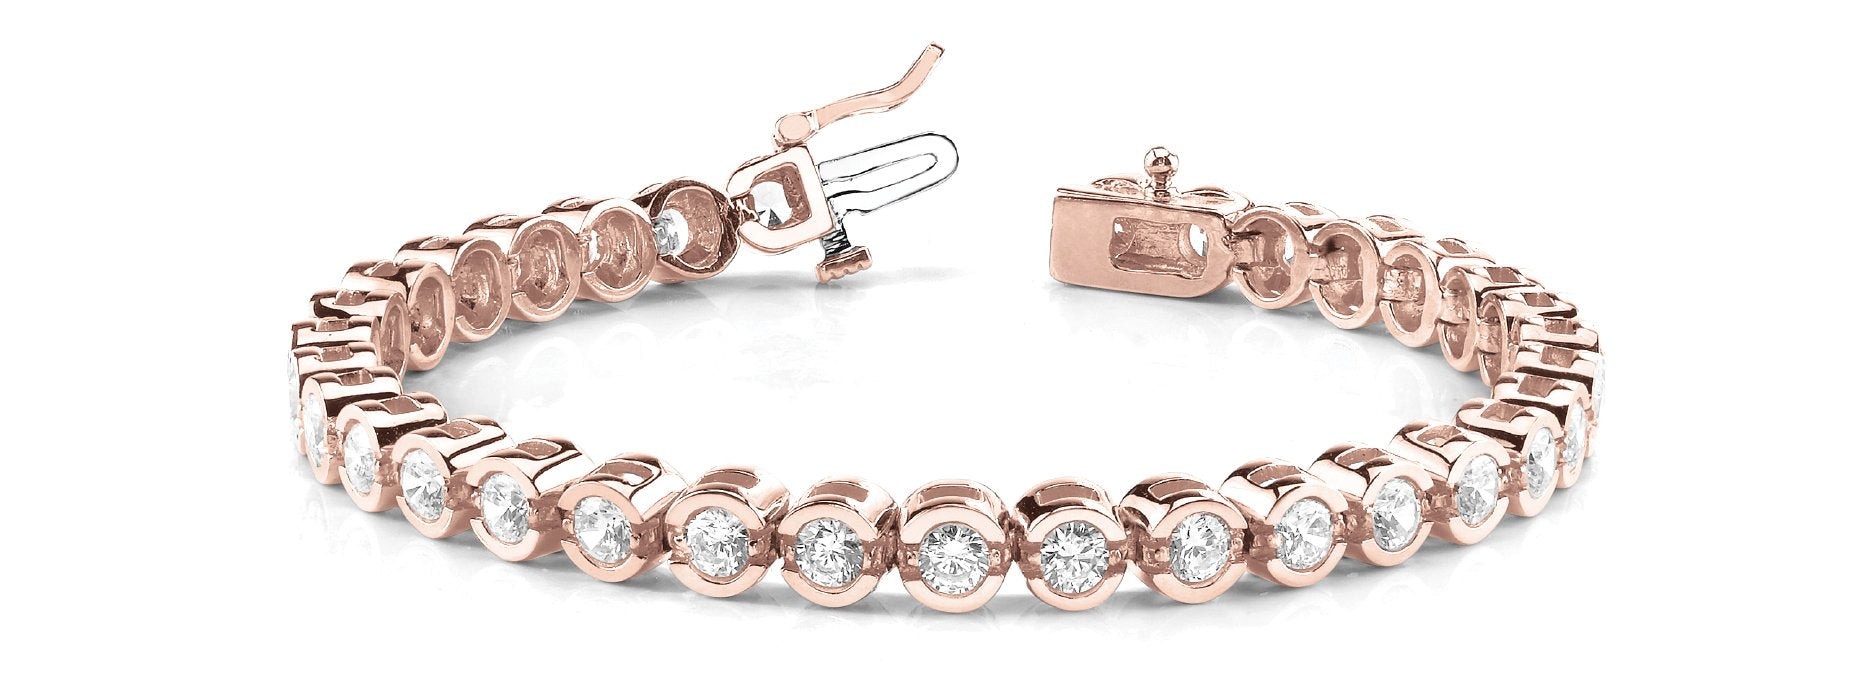 Fancy Diamond Bracelet Ladies 2.38ct tw - 14kt Rose Gold